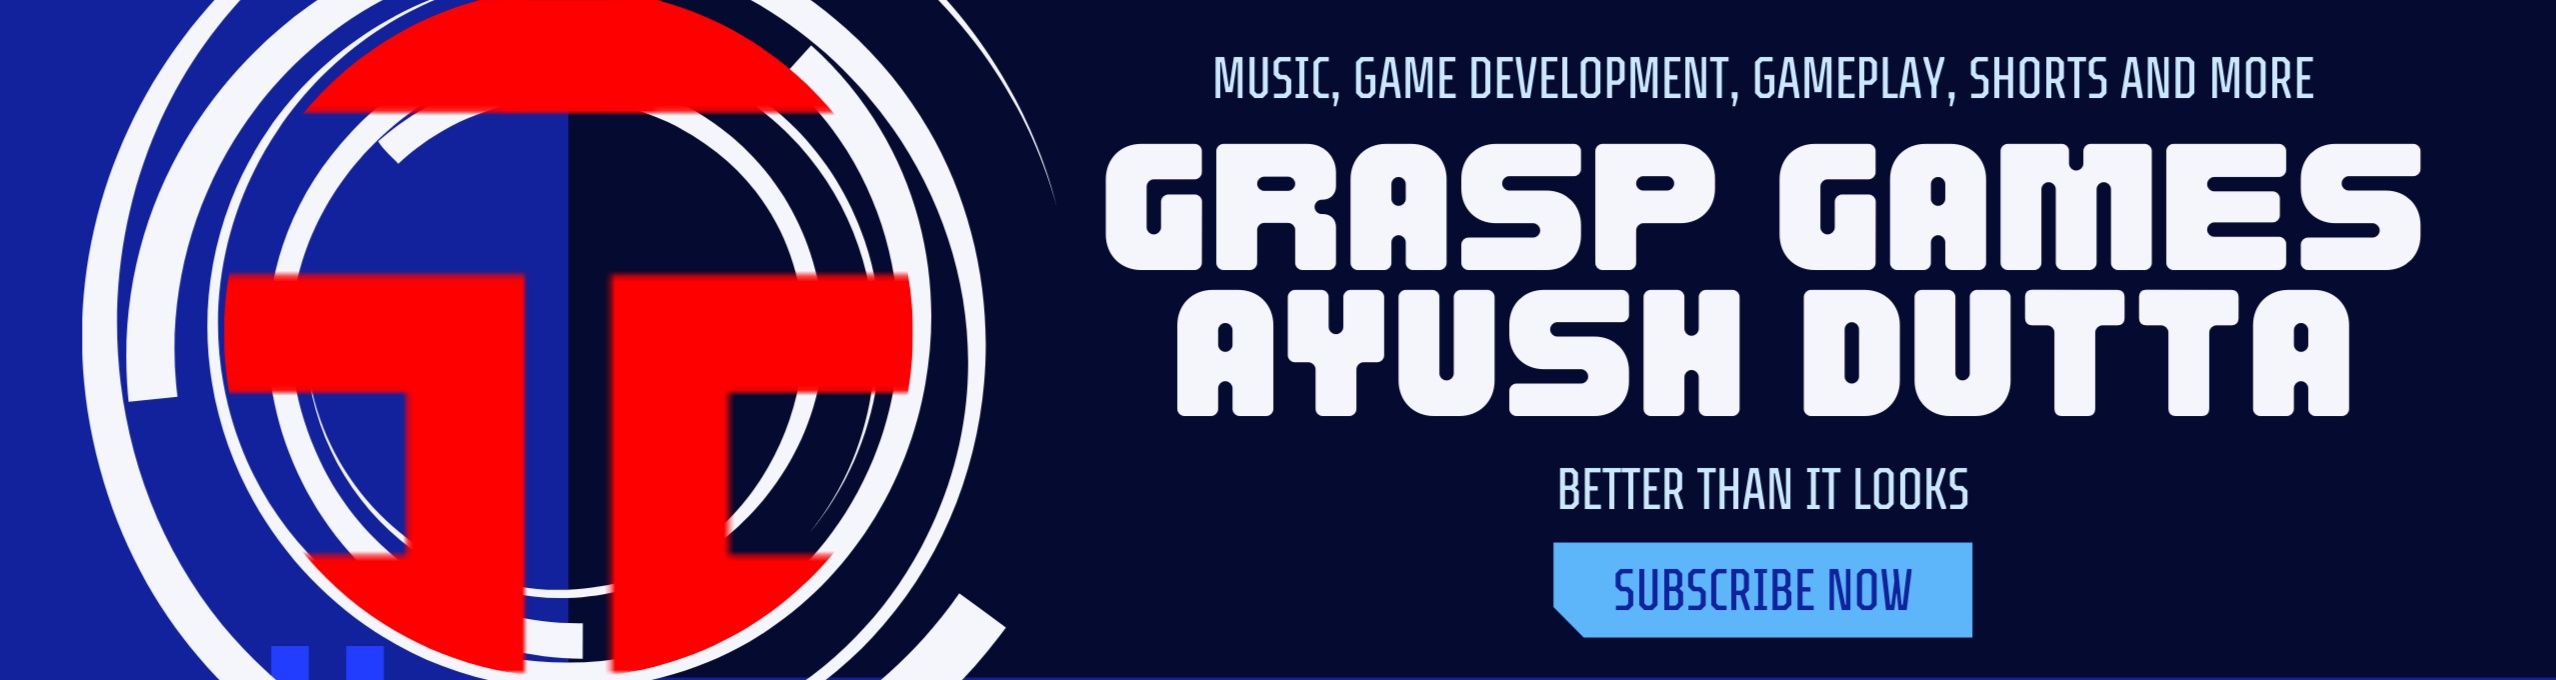 Subscribe Grasp Games Ayush Dutta ™